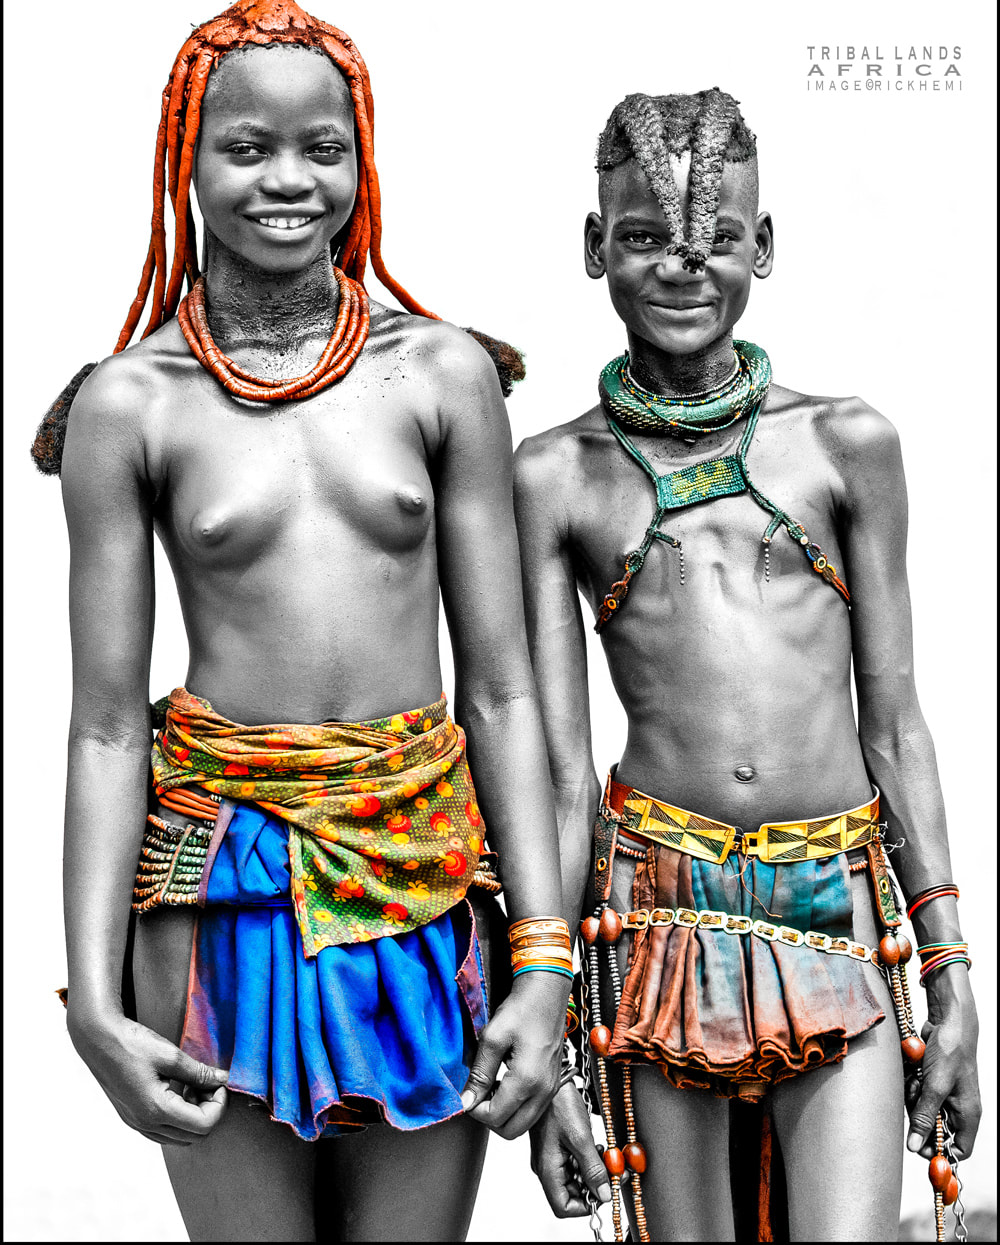 overland travel Africa, tribal lands, semi-naked tribal street portrait, image by Rick Hemi